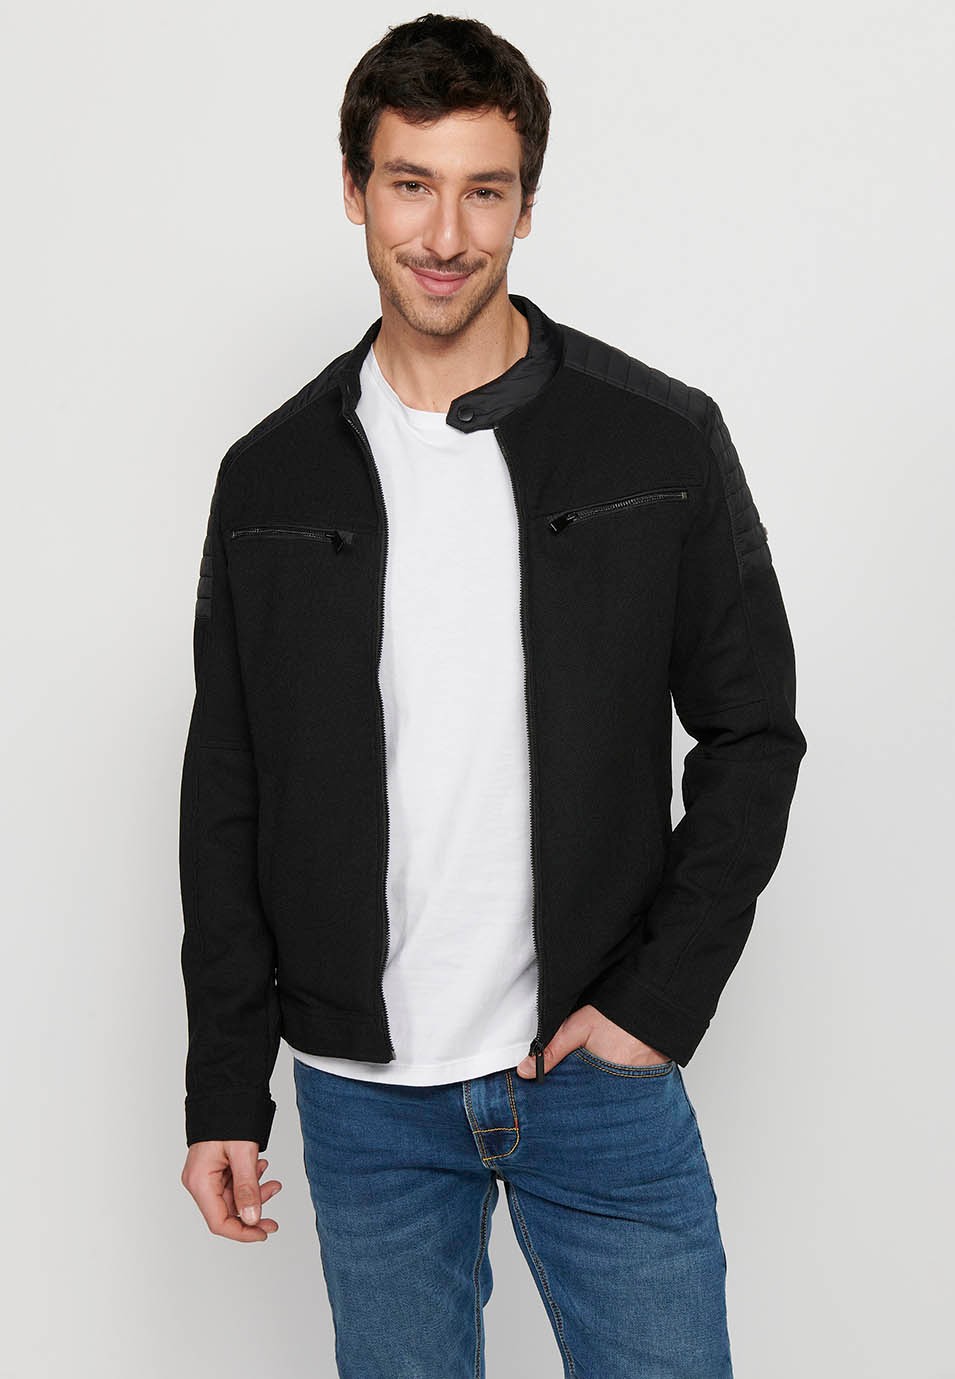 Black Cotton Round Neck Jacket with Front Zipper Closure for Men